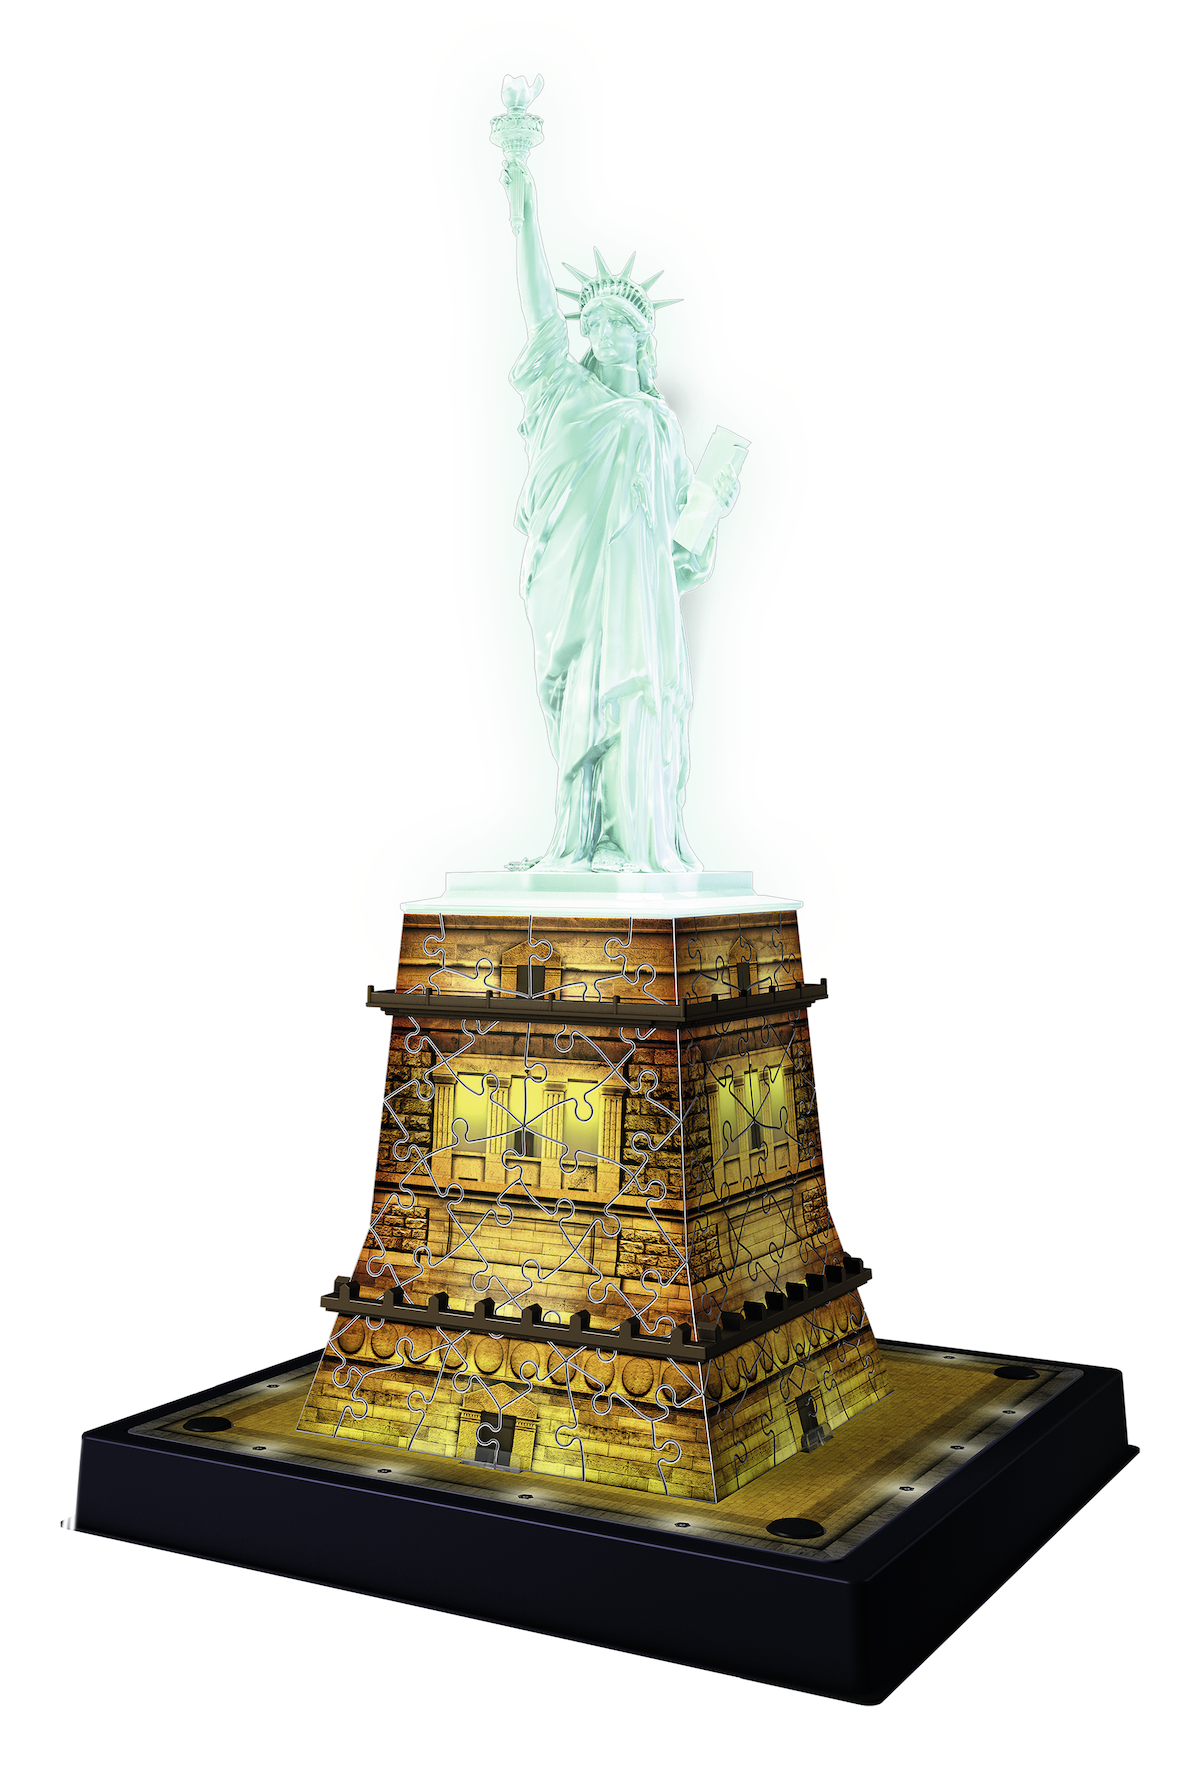 Ravensburger - 3d puzzle statua della liberta' night edition, londra, 216 pezzi, 10+ anni - RAVENSBURGER 3D PUZZLE